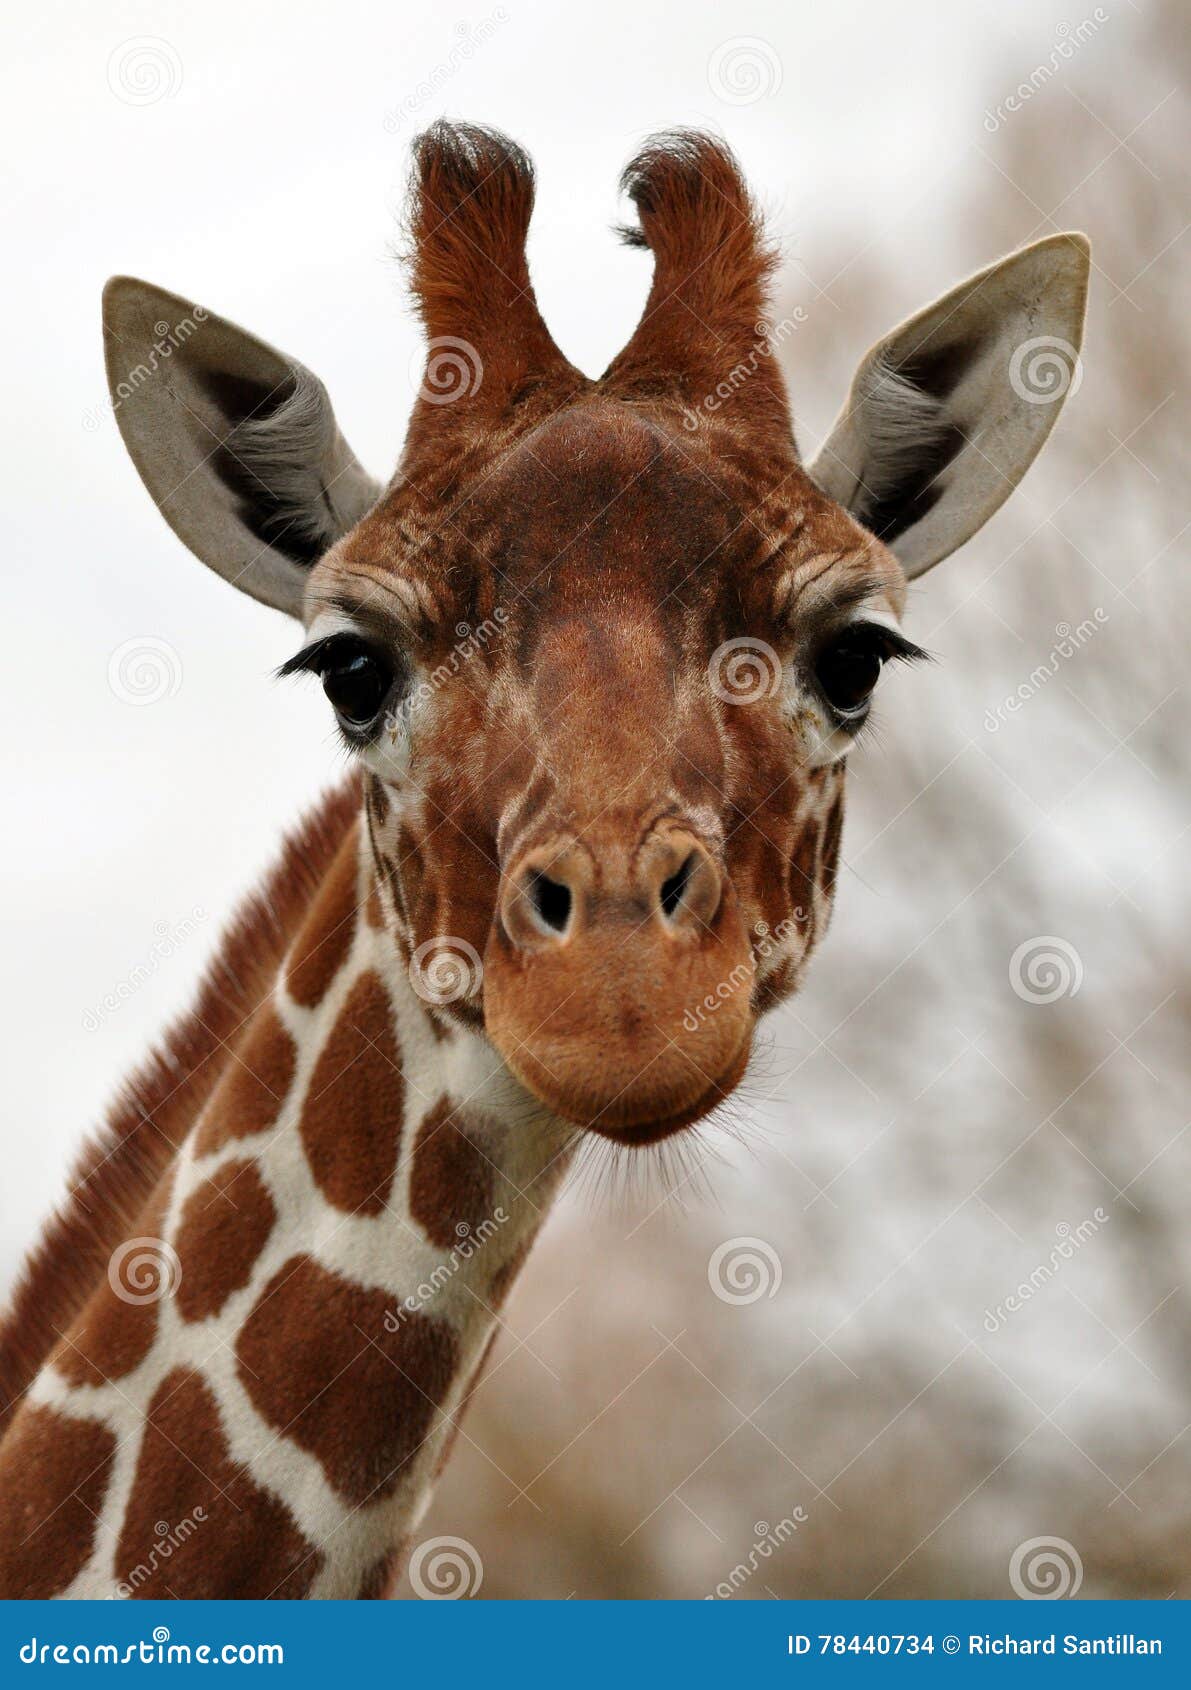 funny or sad giraffe face?